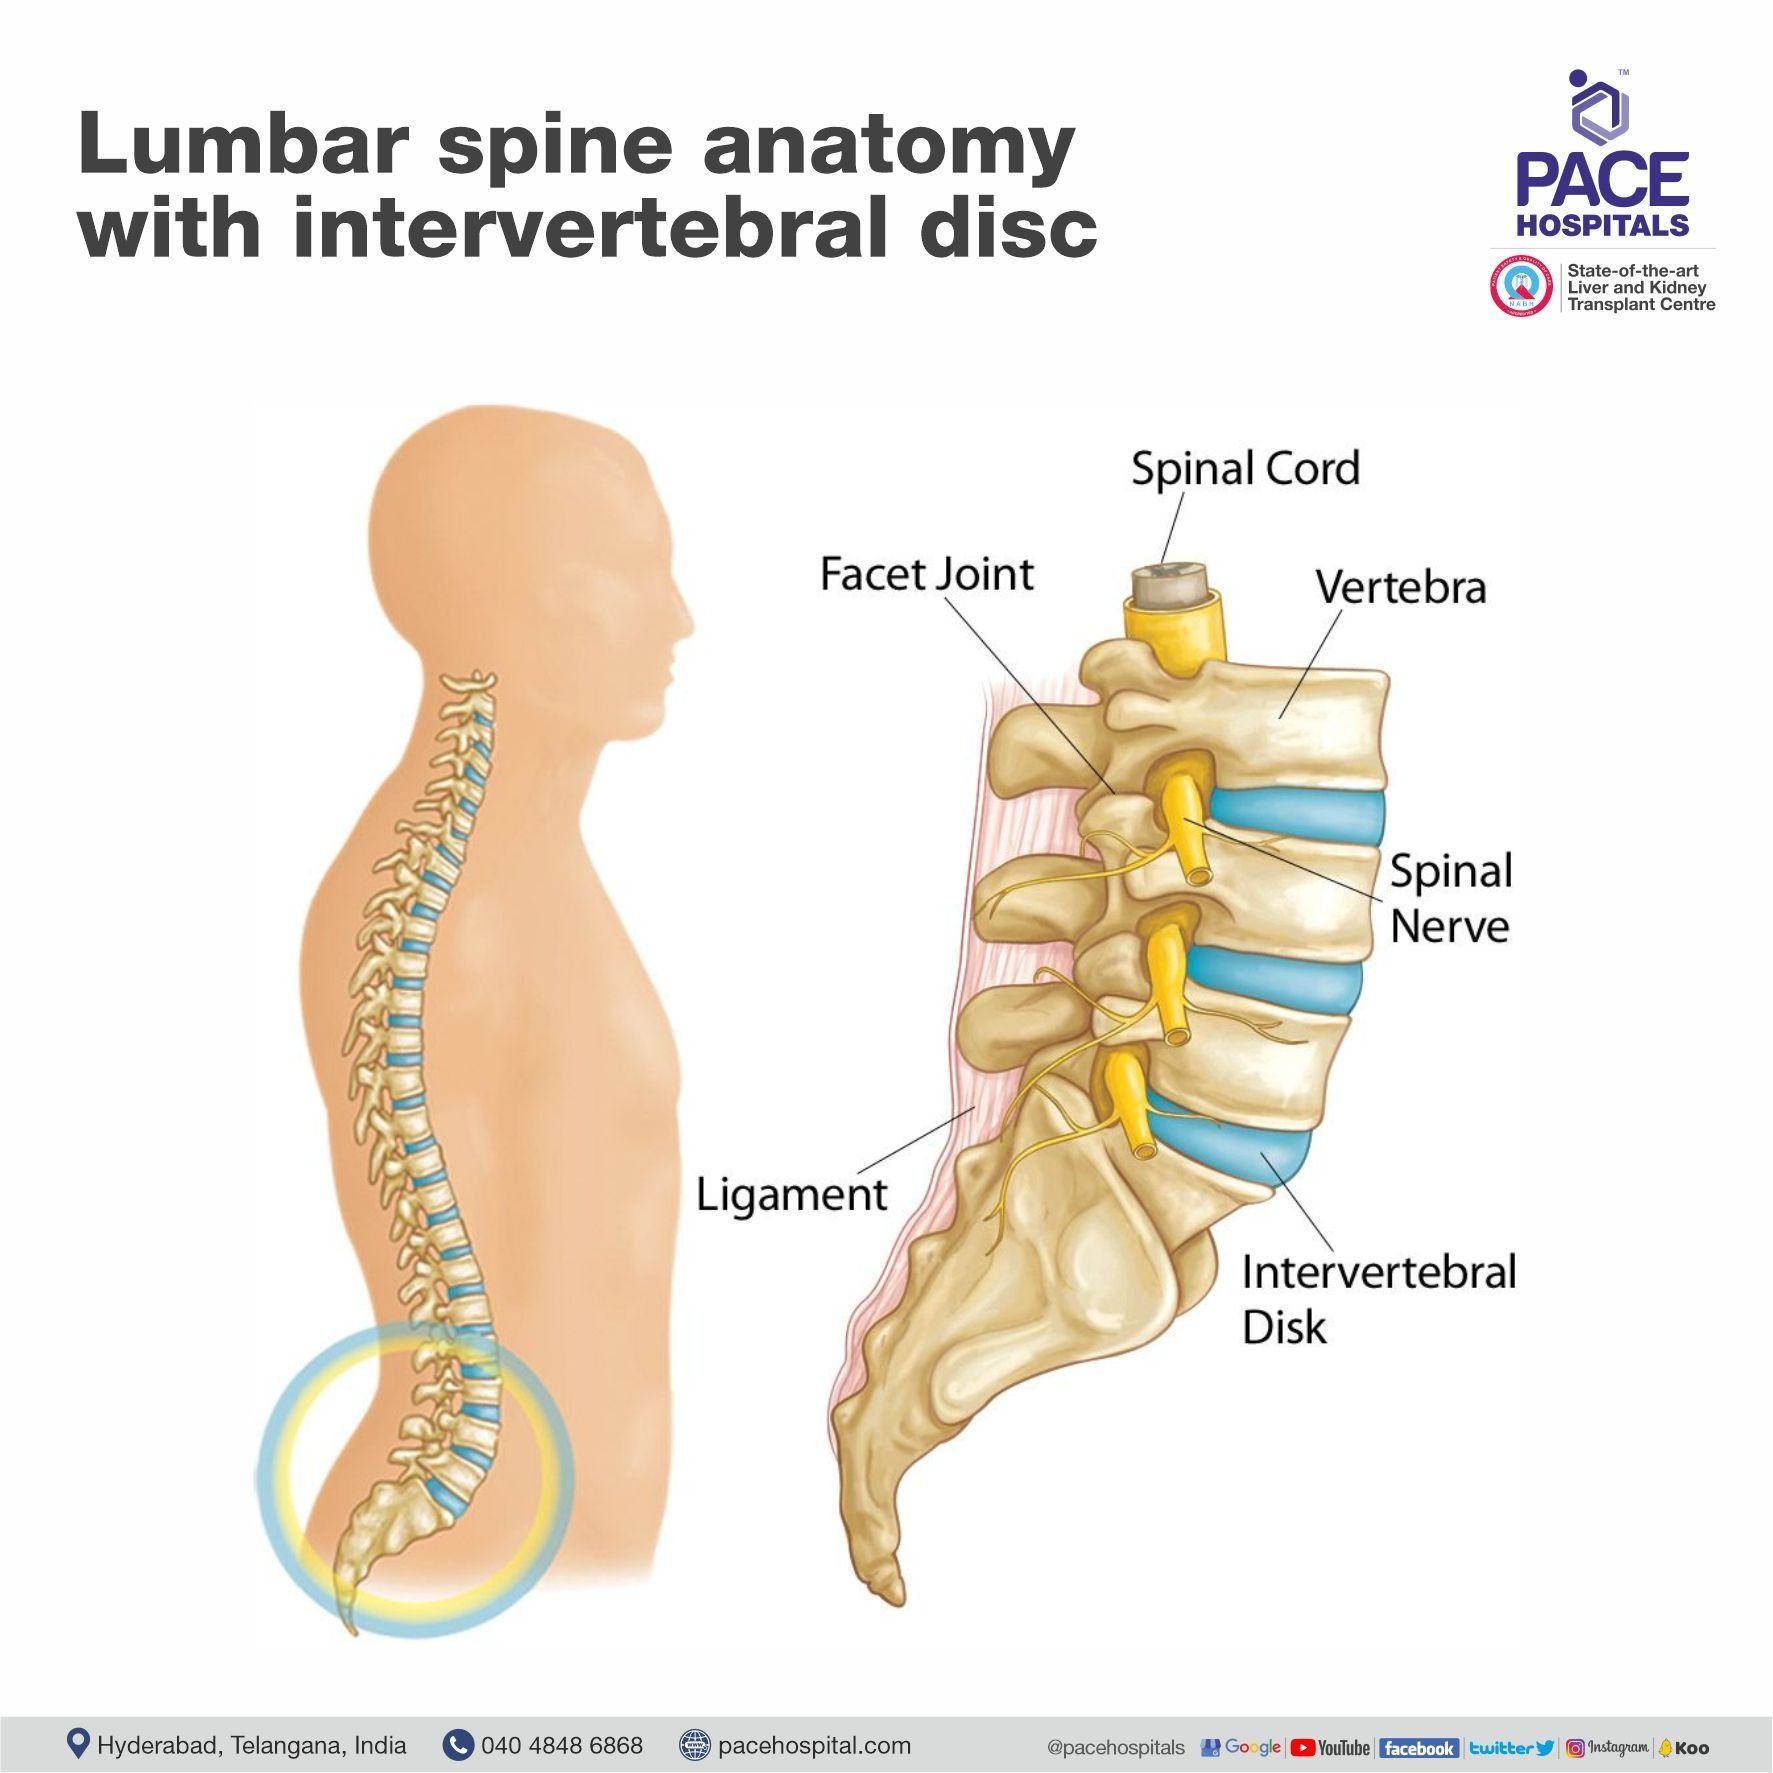 Lumbar spine anatomy with intervertebral disc